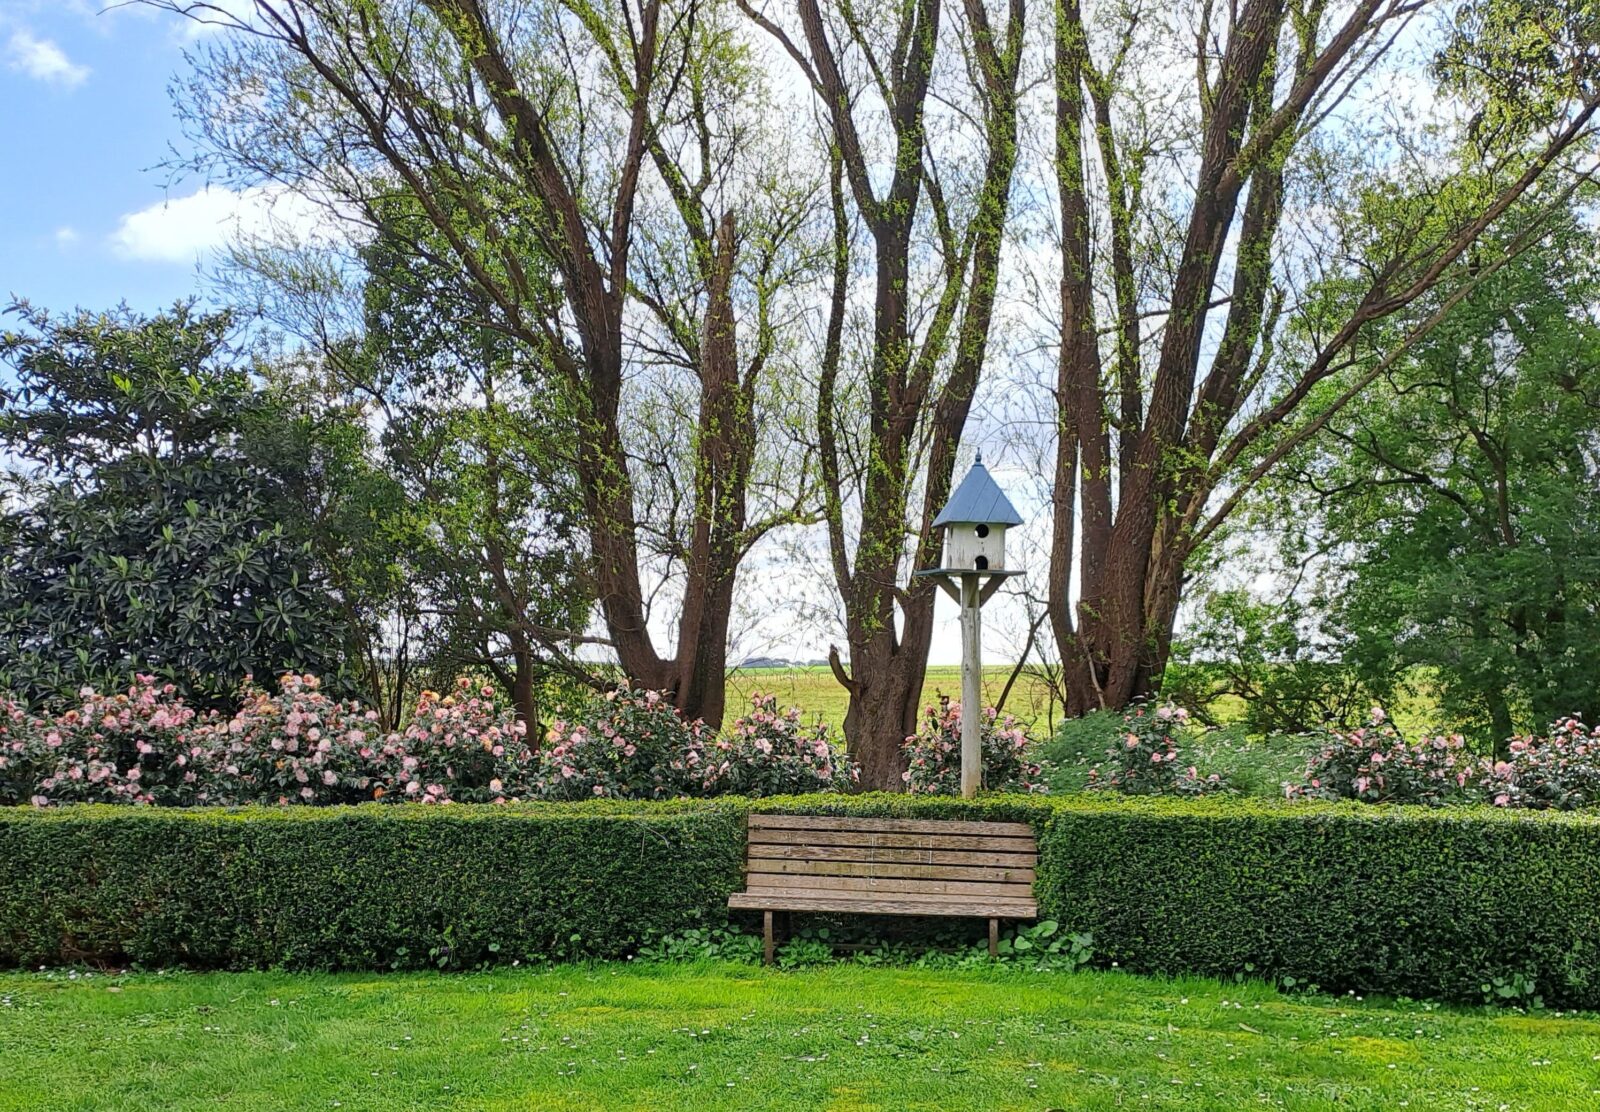 Box hedge with camellia hedge provide a peaceful spot